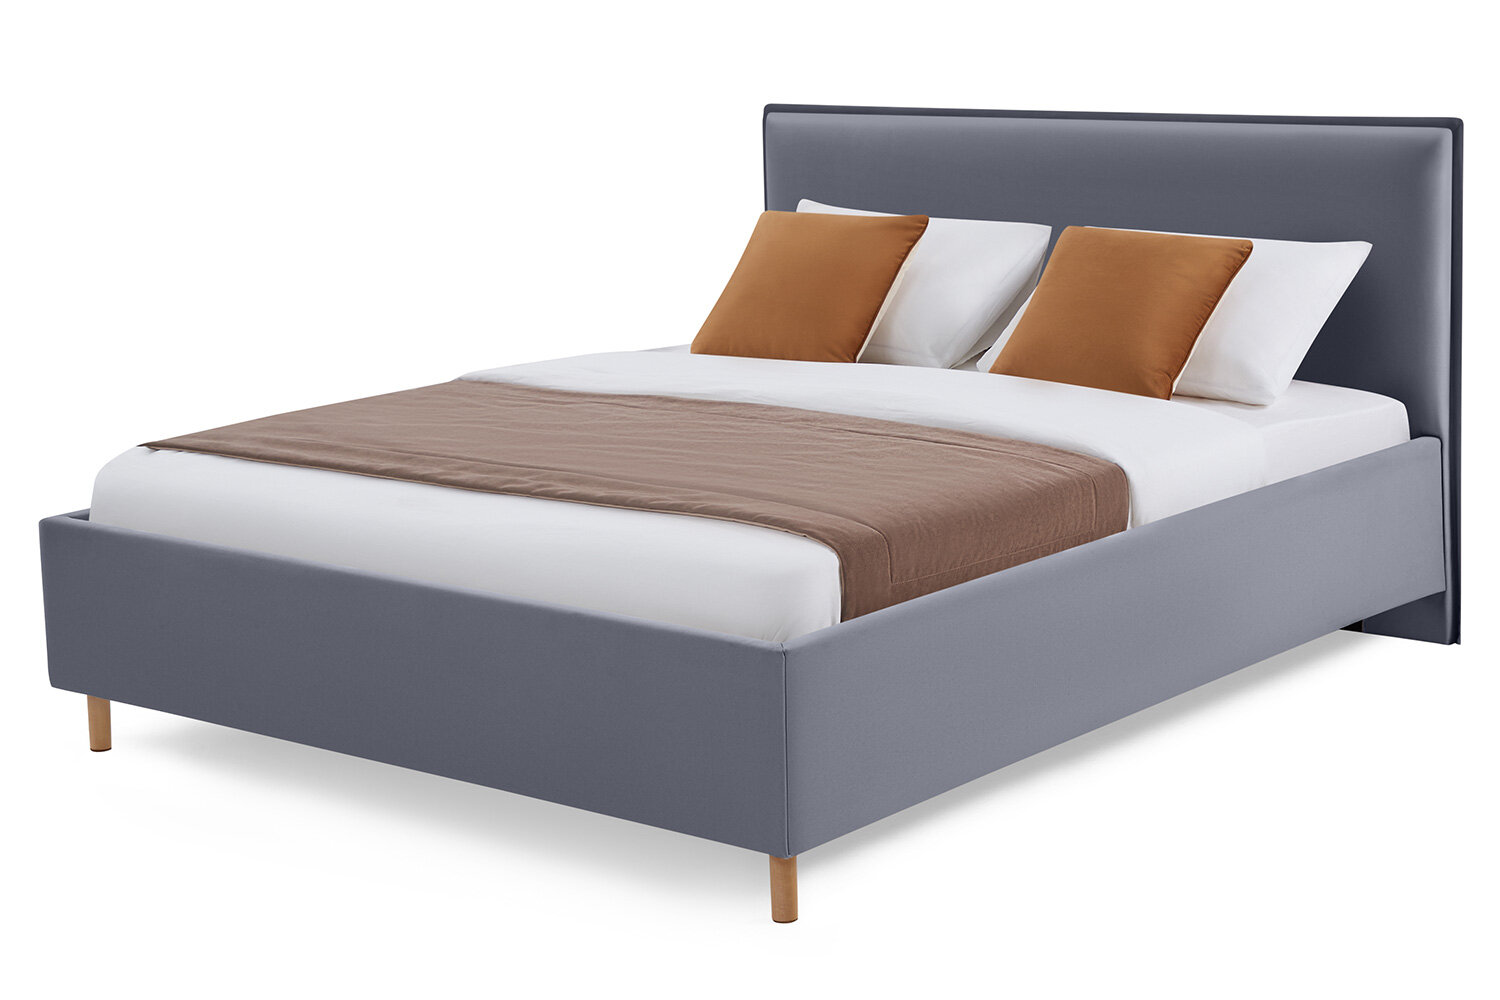 Каркас кровати Hoff Джесс, 160х200 см, цвет тёмно-серый